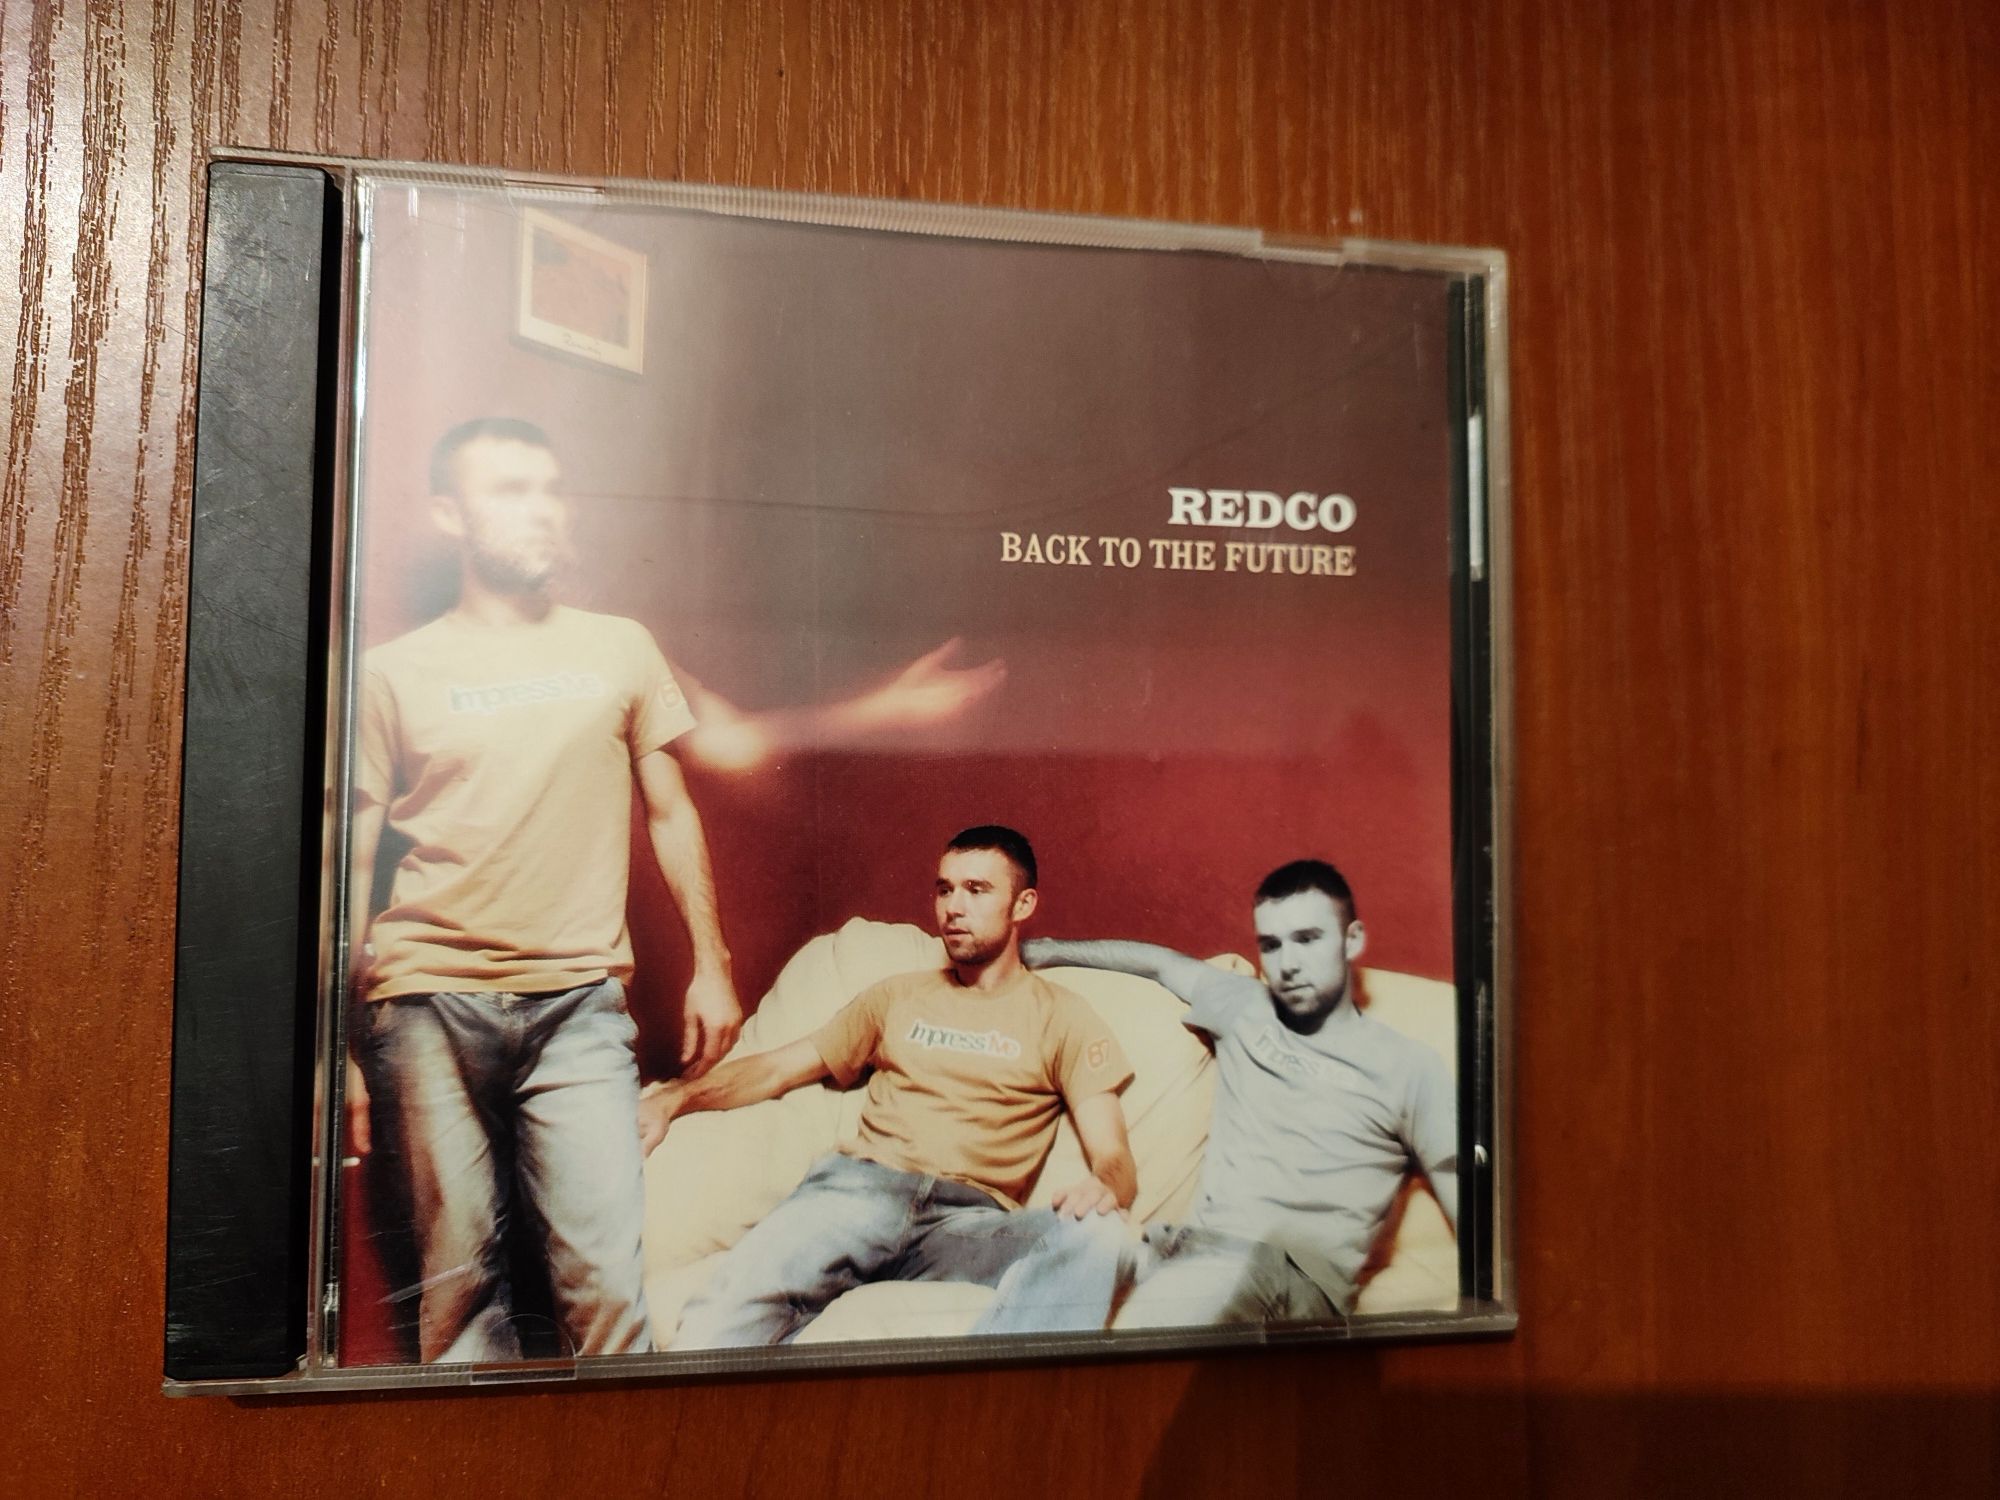 Музыкальный CD Redco альбом Back to the Future  2007